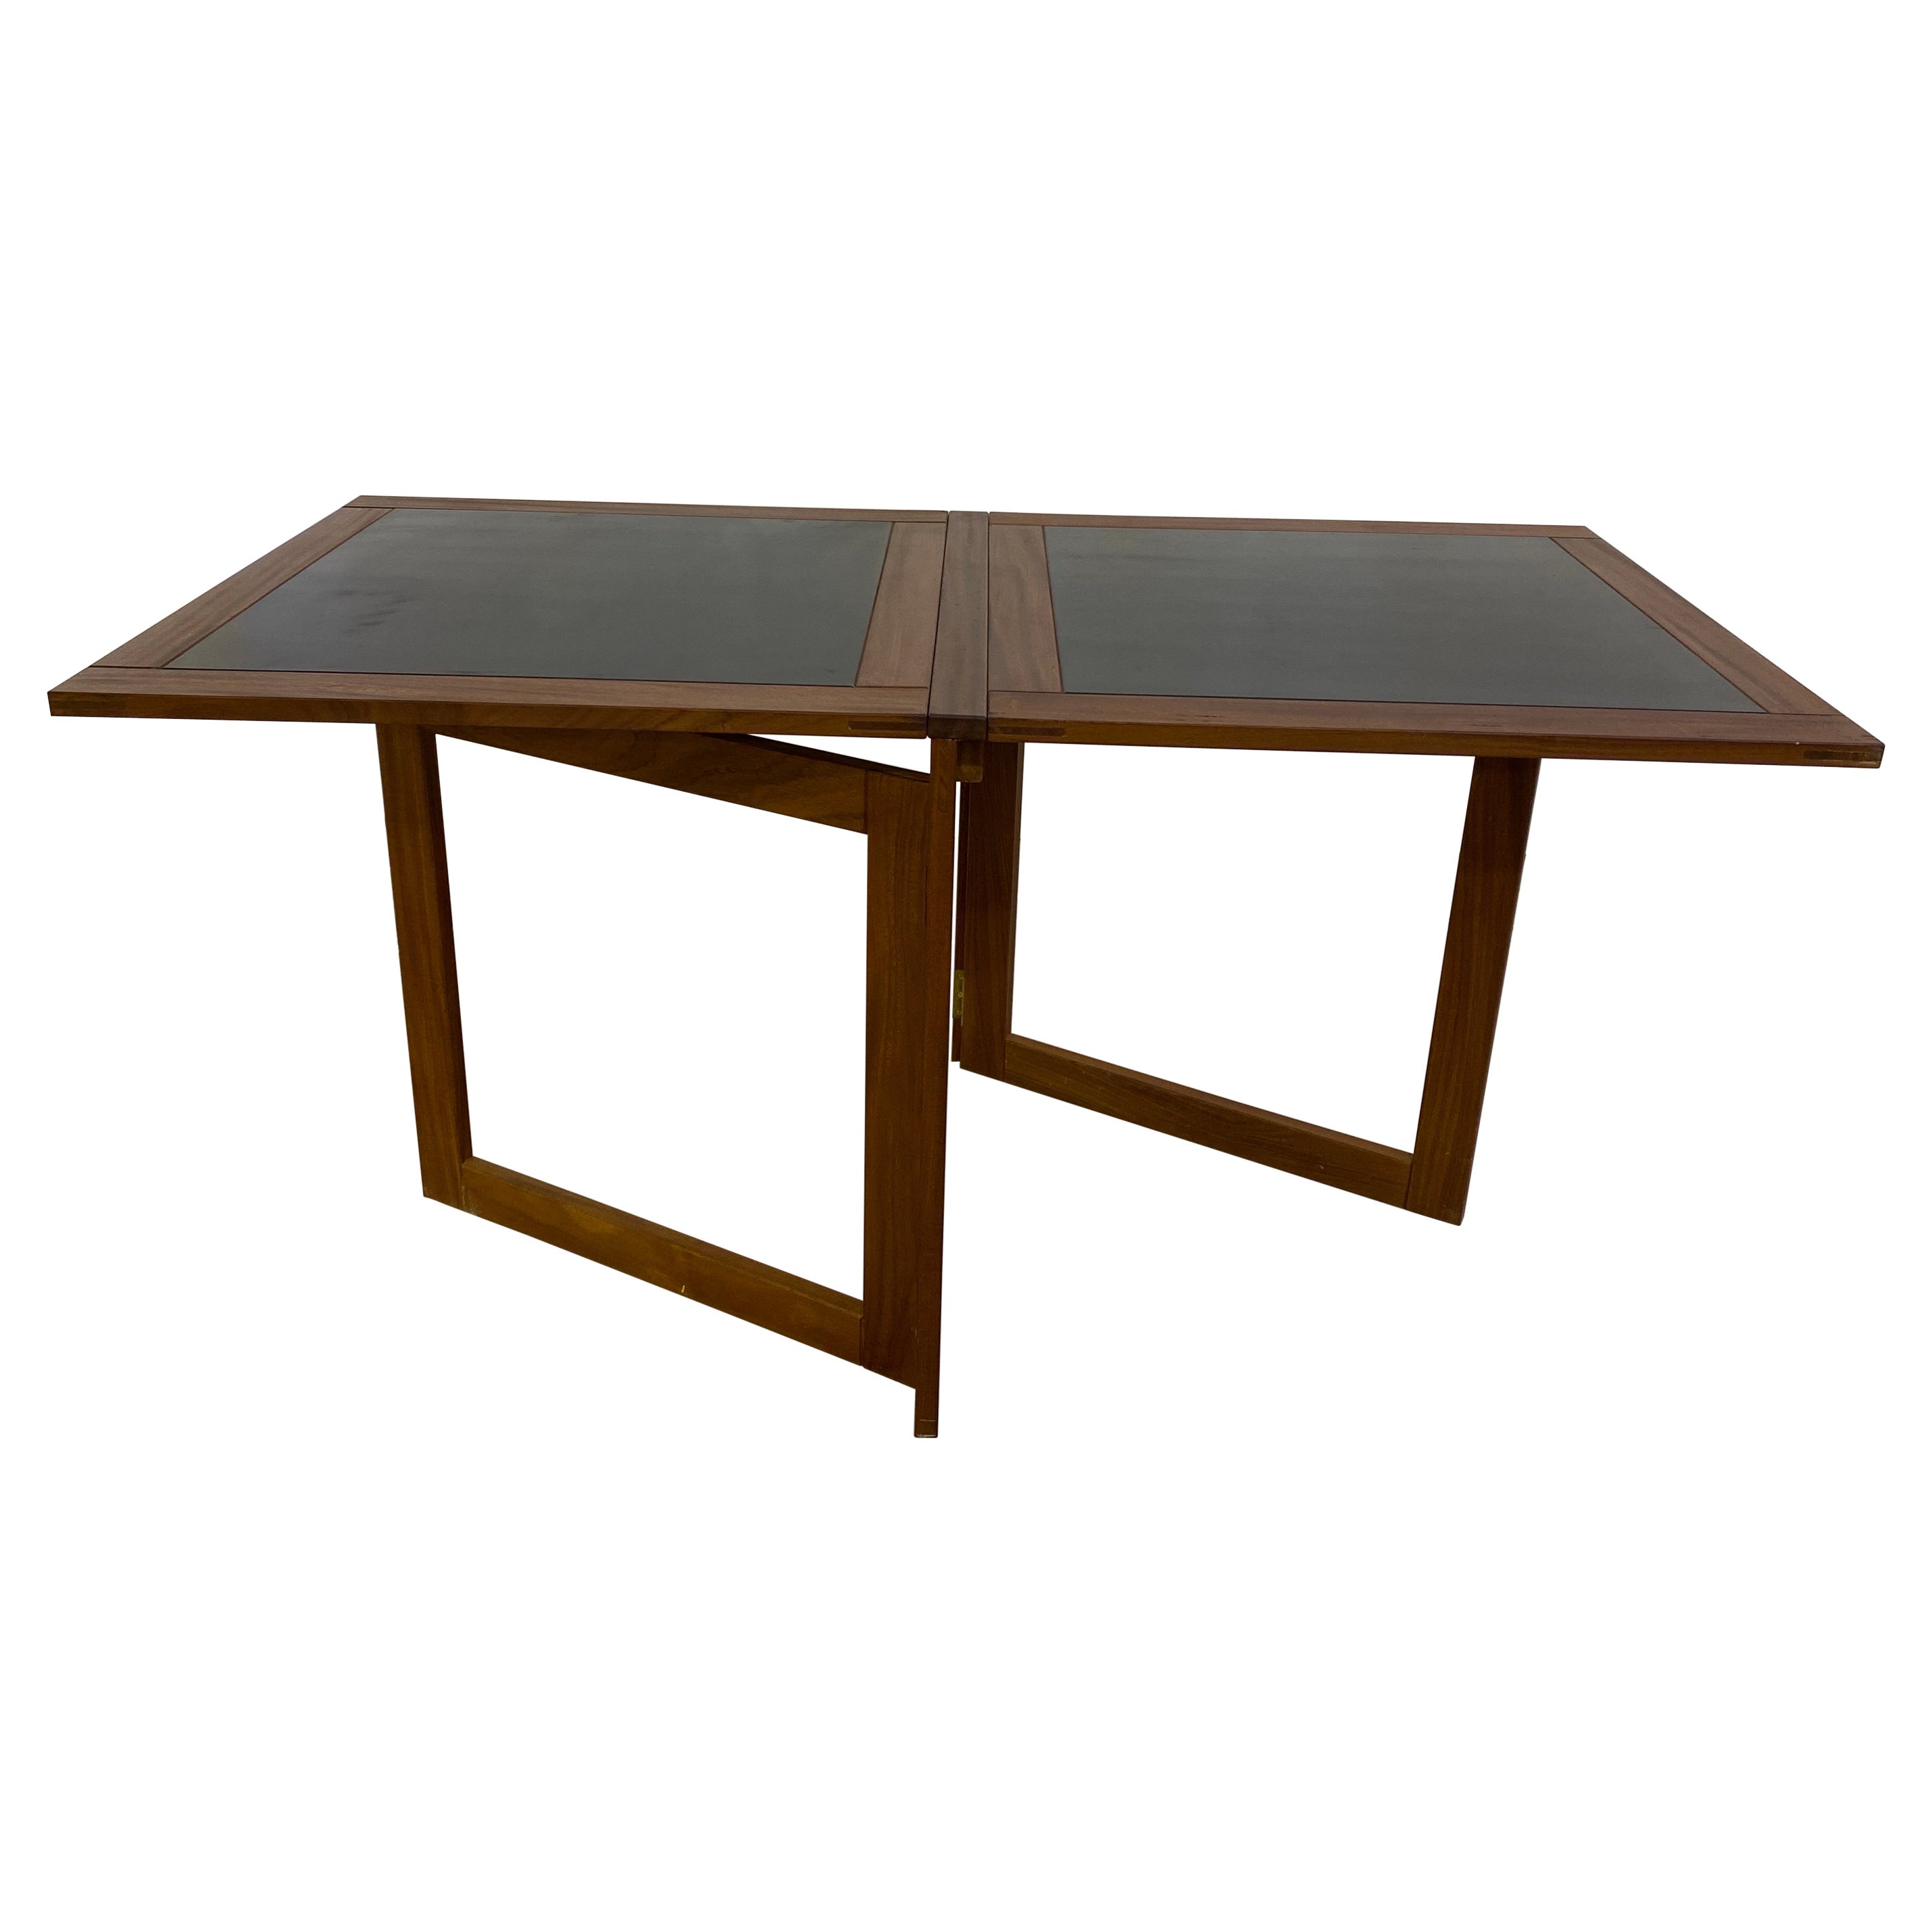 Arne Robbert Multi-Use Table, Coffee, Endtable or Patio!